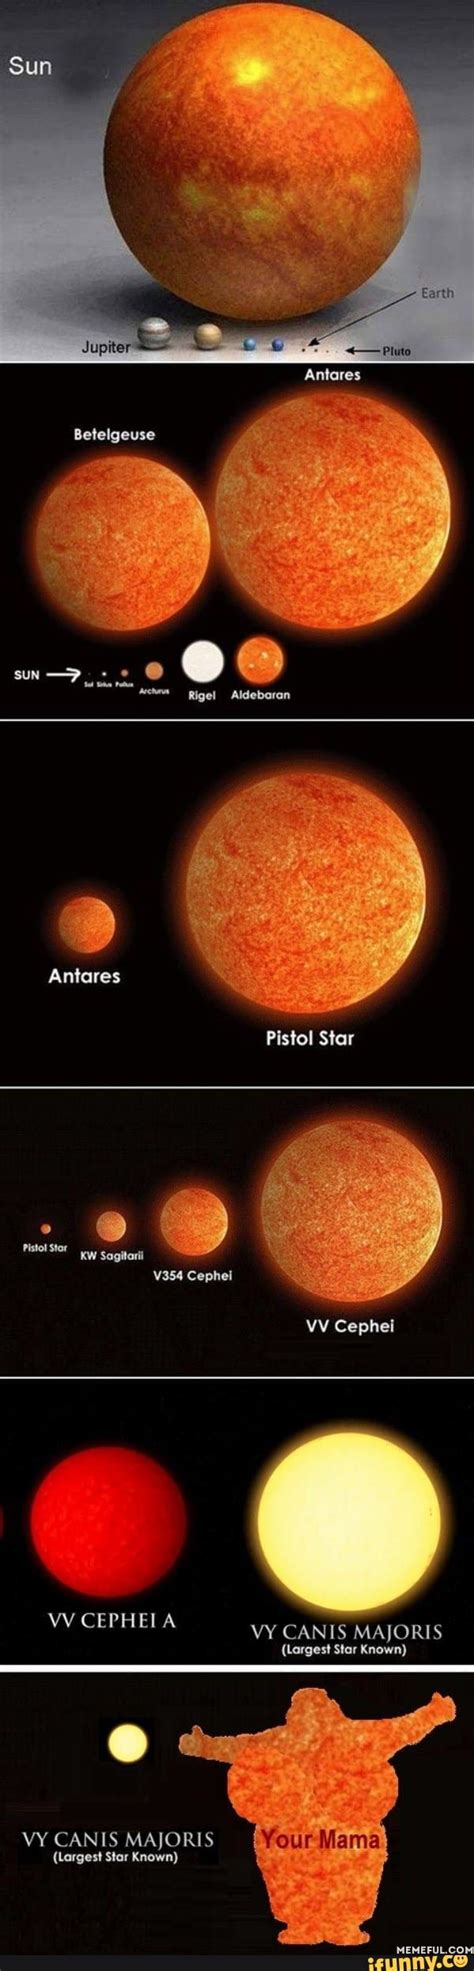 Antares Betelgeuse Antares Pistol Star Kw Sagitaril V354 Cephei Vv